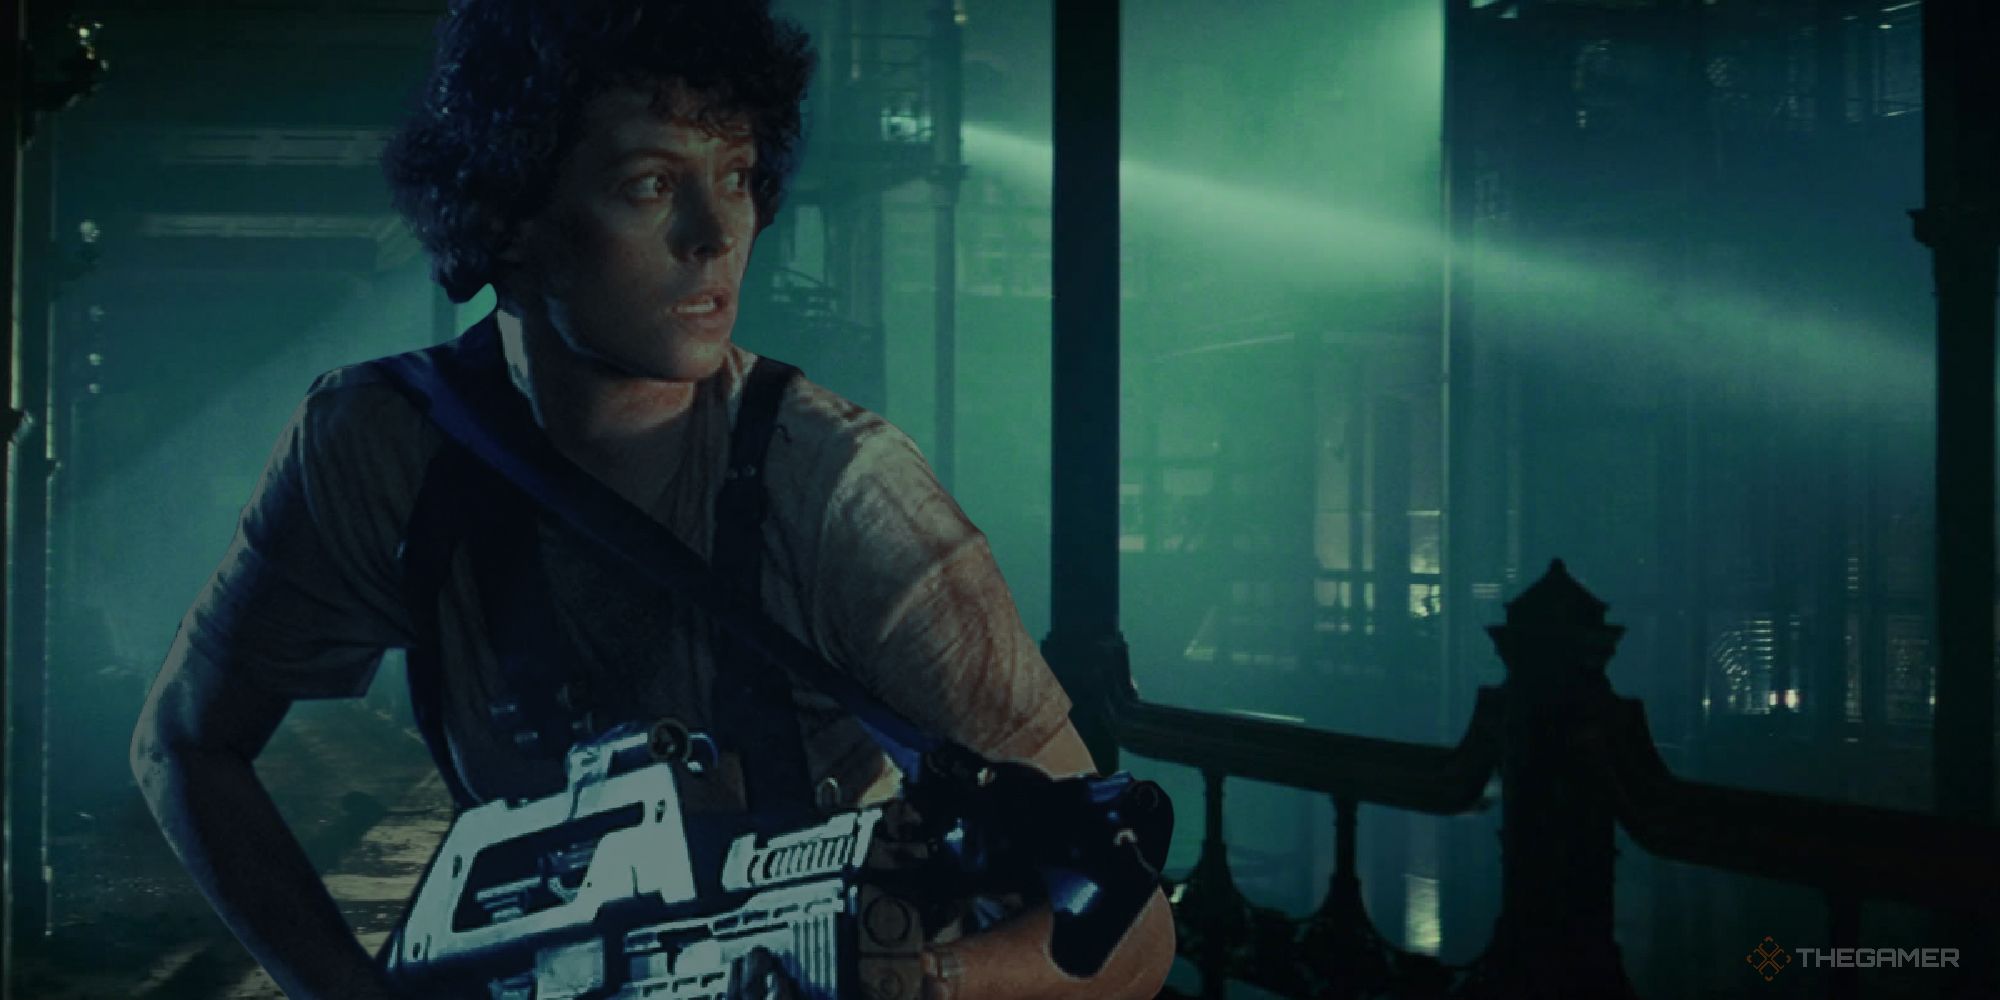 sigourney weaver as Ripley but in a Blade Runner still